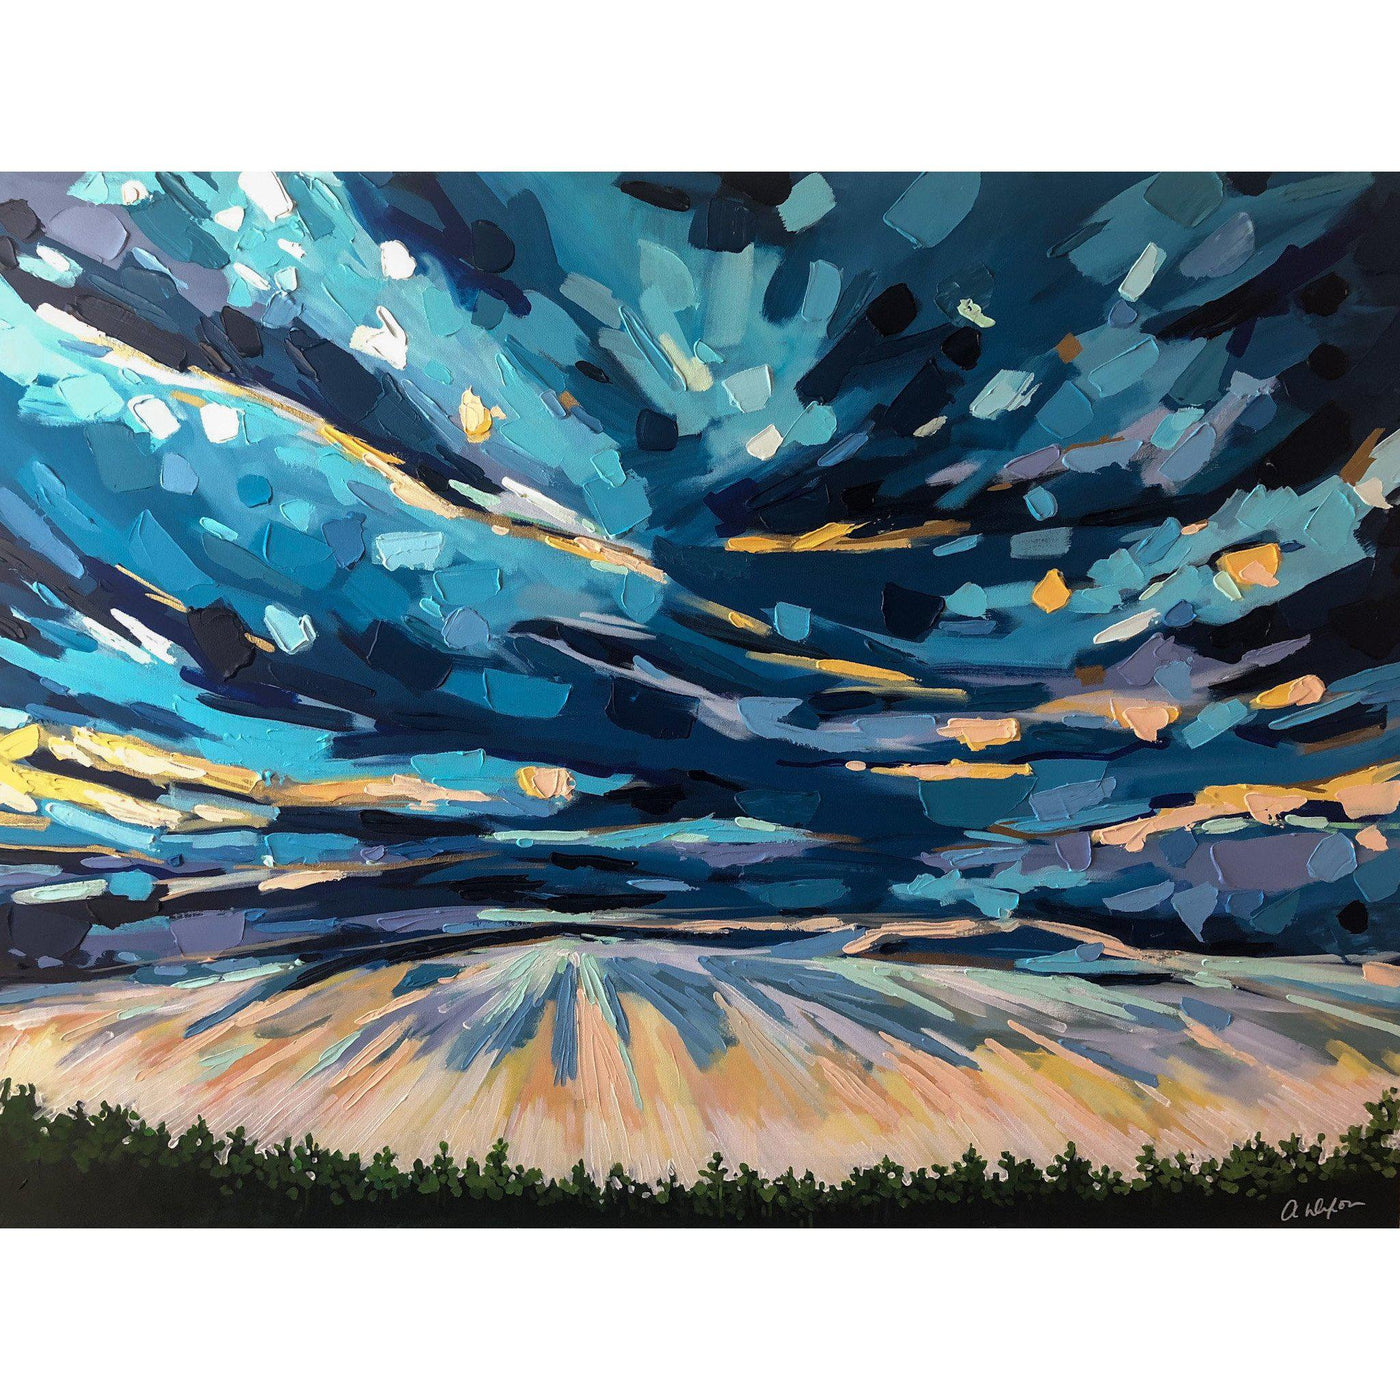 Amy Dixon art artist edmonton alberta prairie landscape clouds